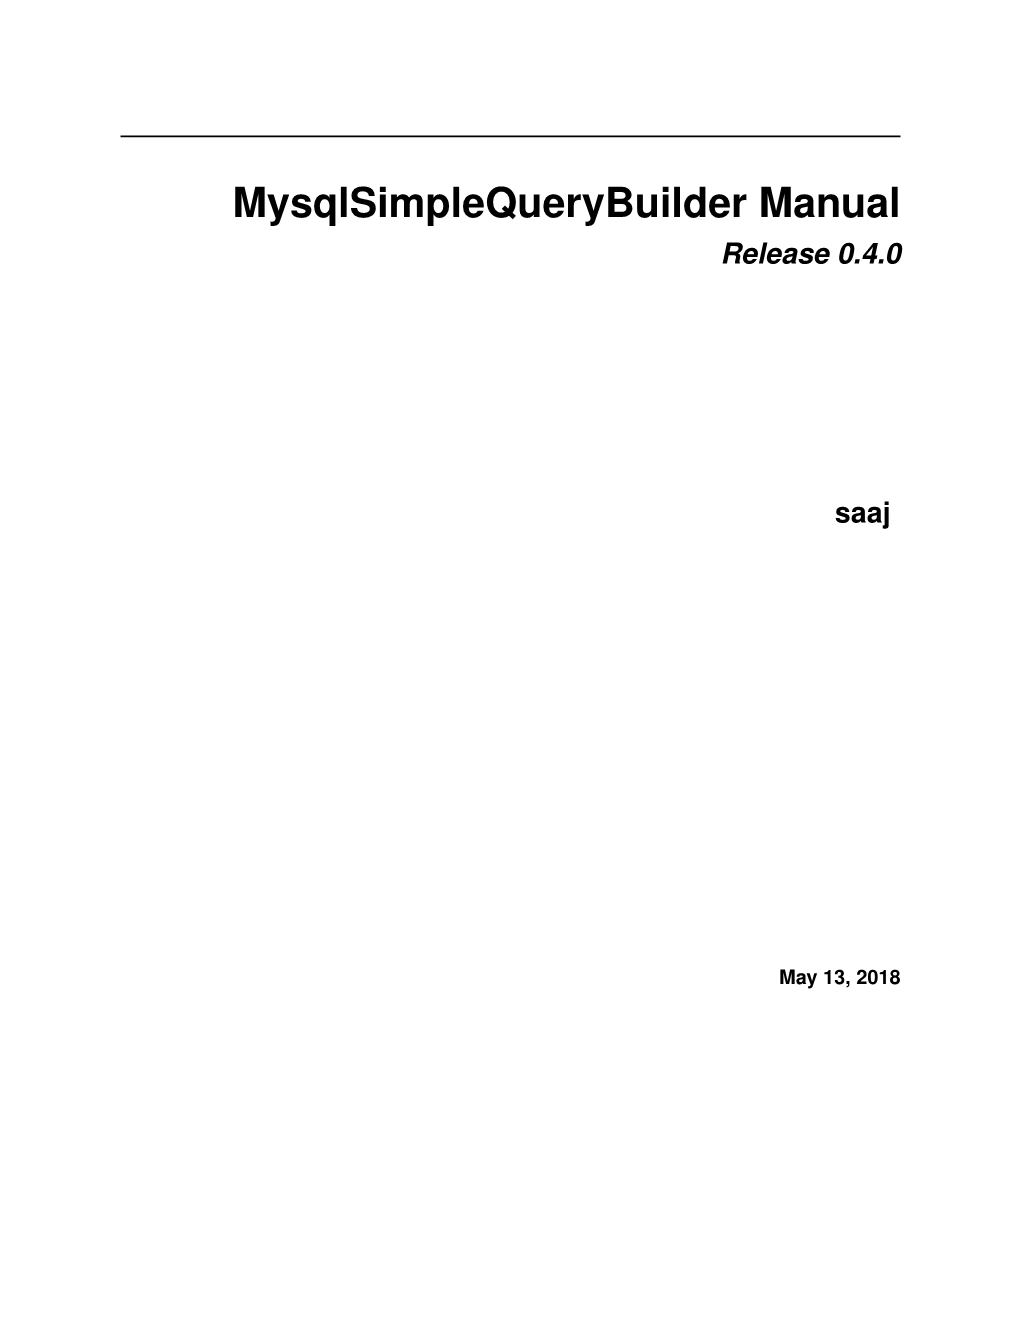 Mysqlsimplequerybuilder Manual Release 0.4.0